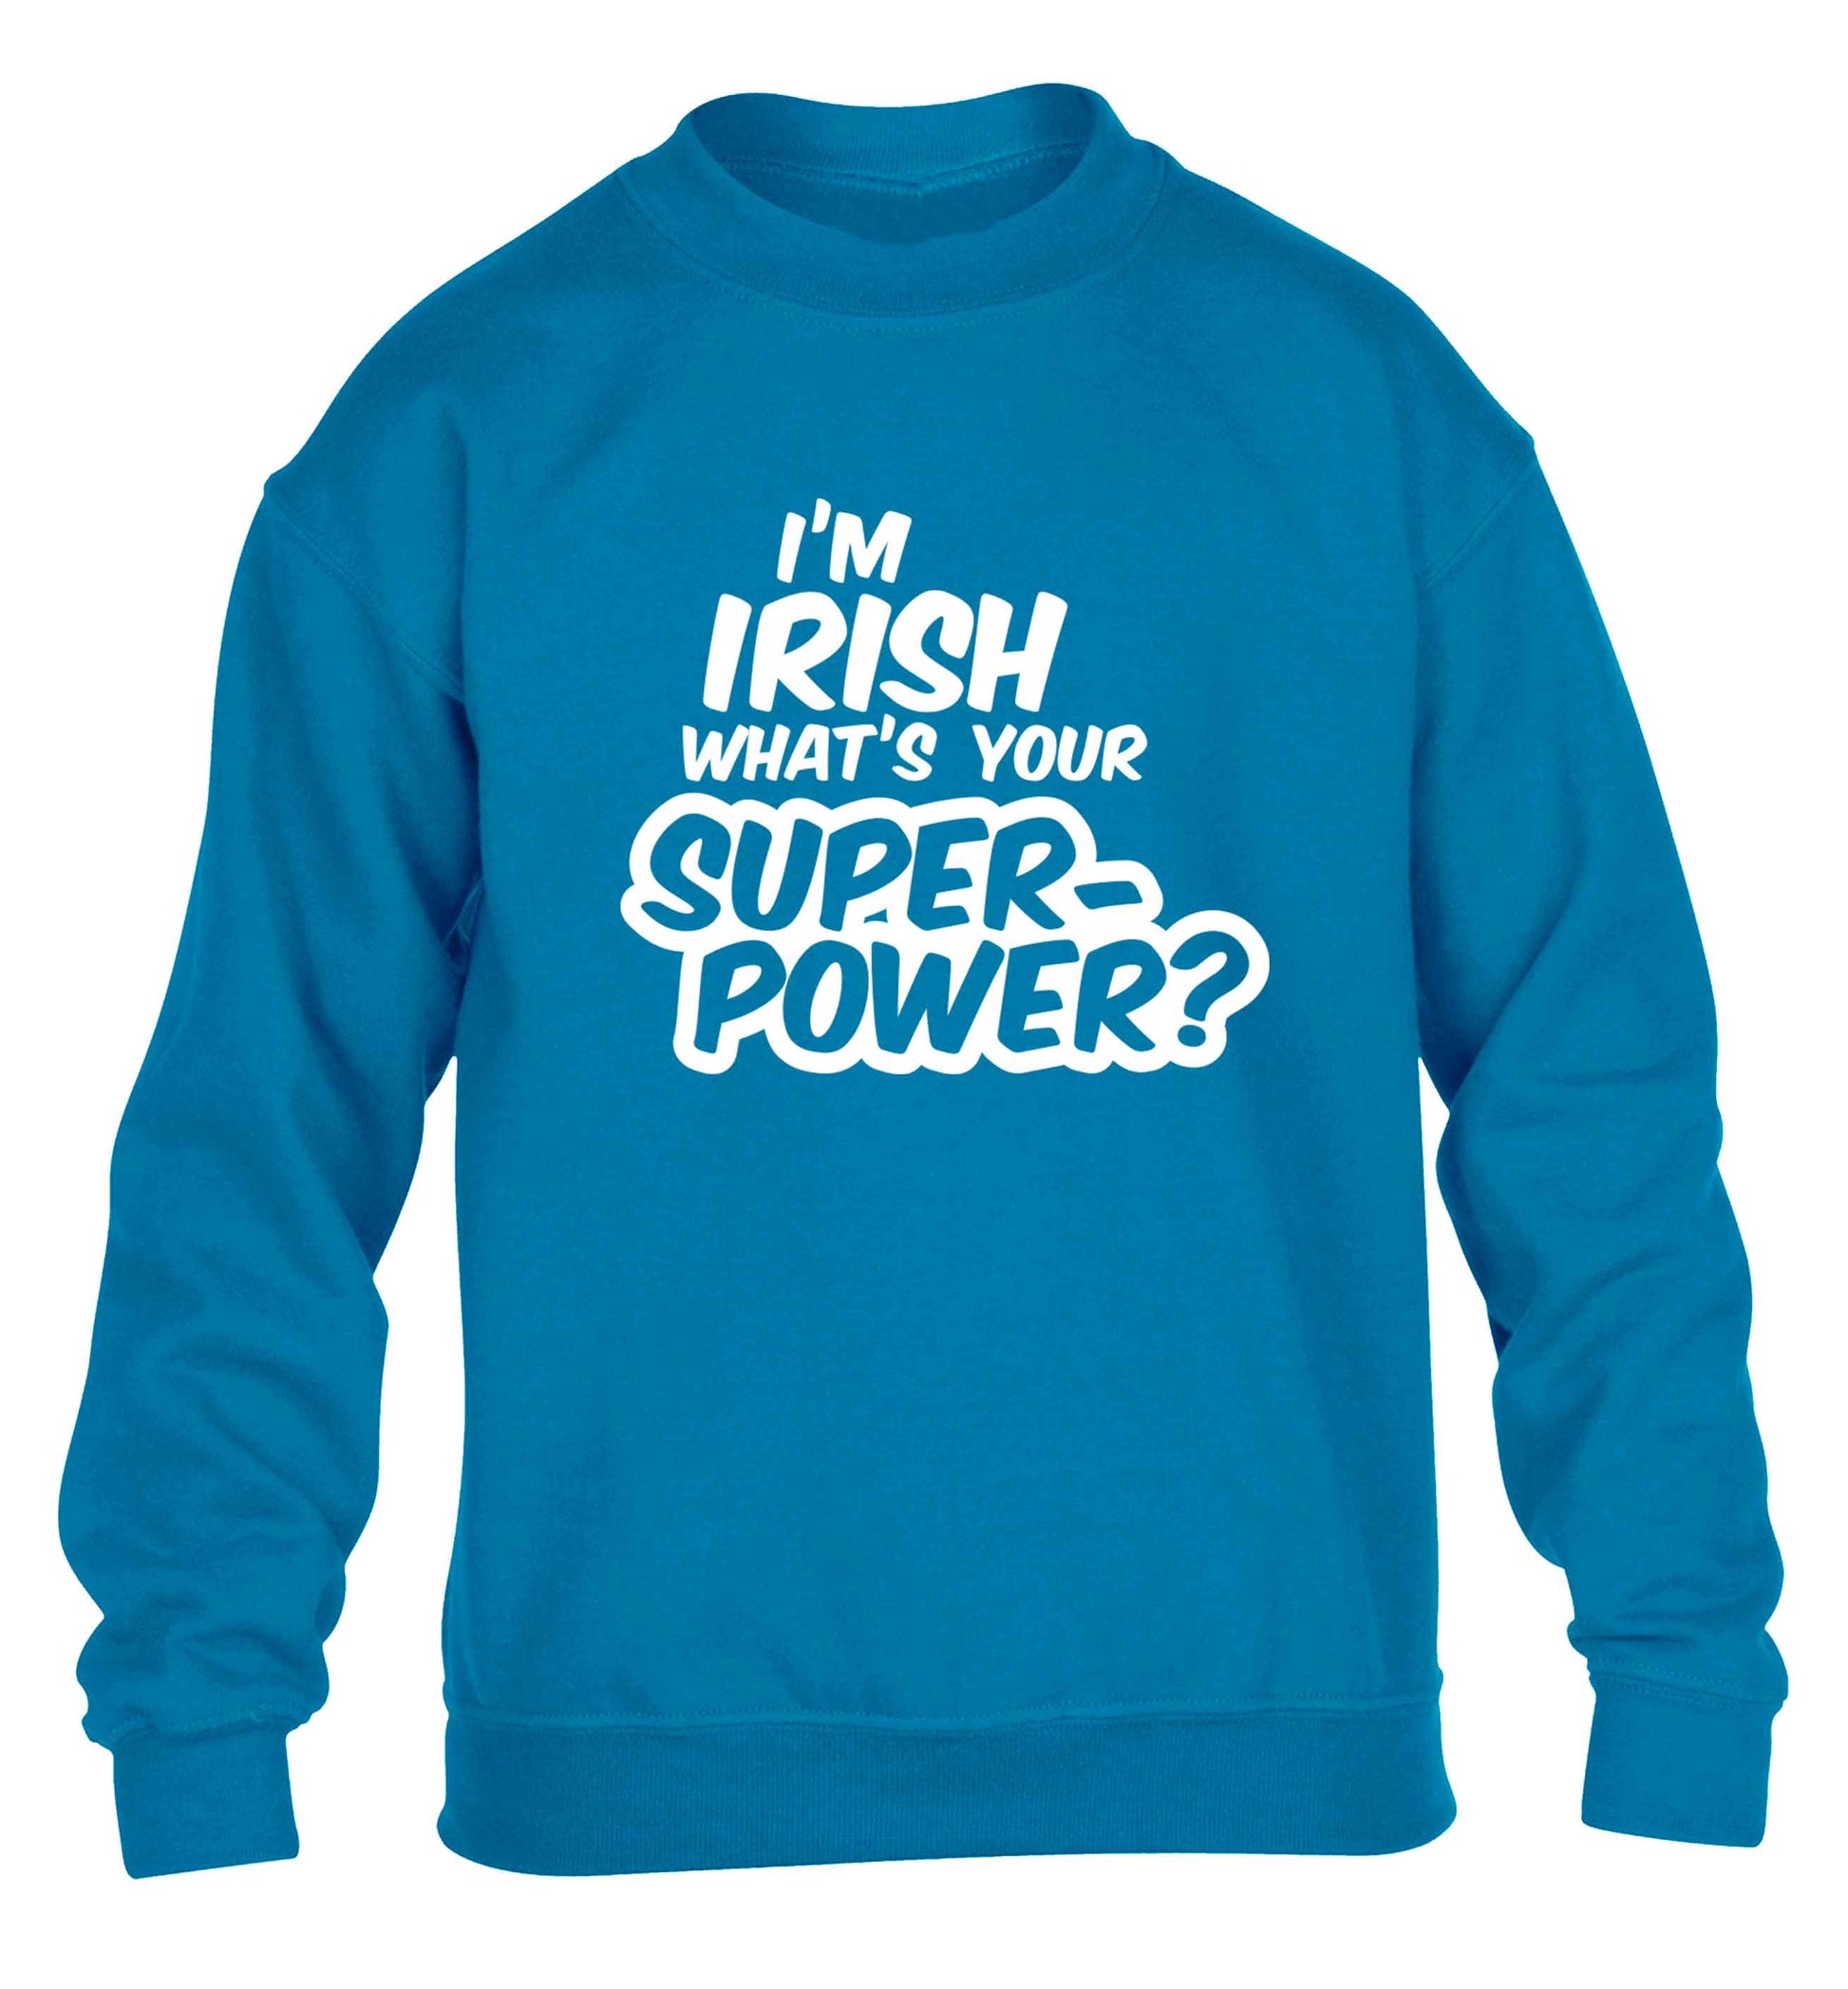 I'm Irish what's your superpower? children's blue sweater 12-13 Years